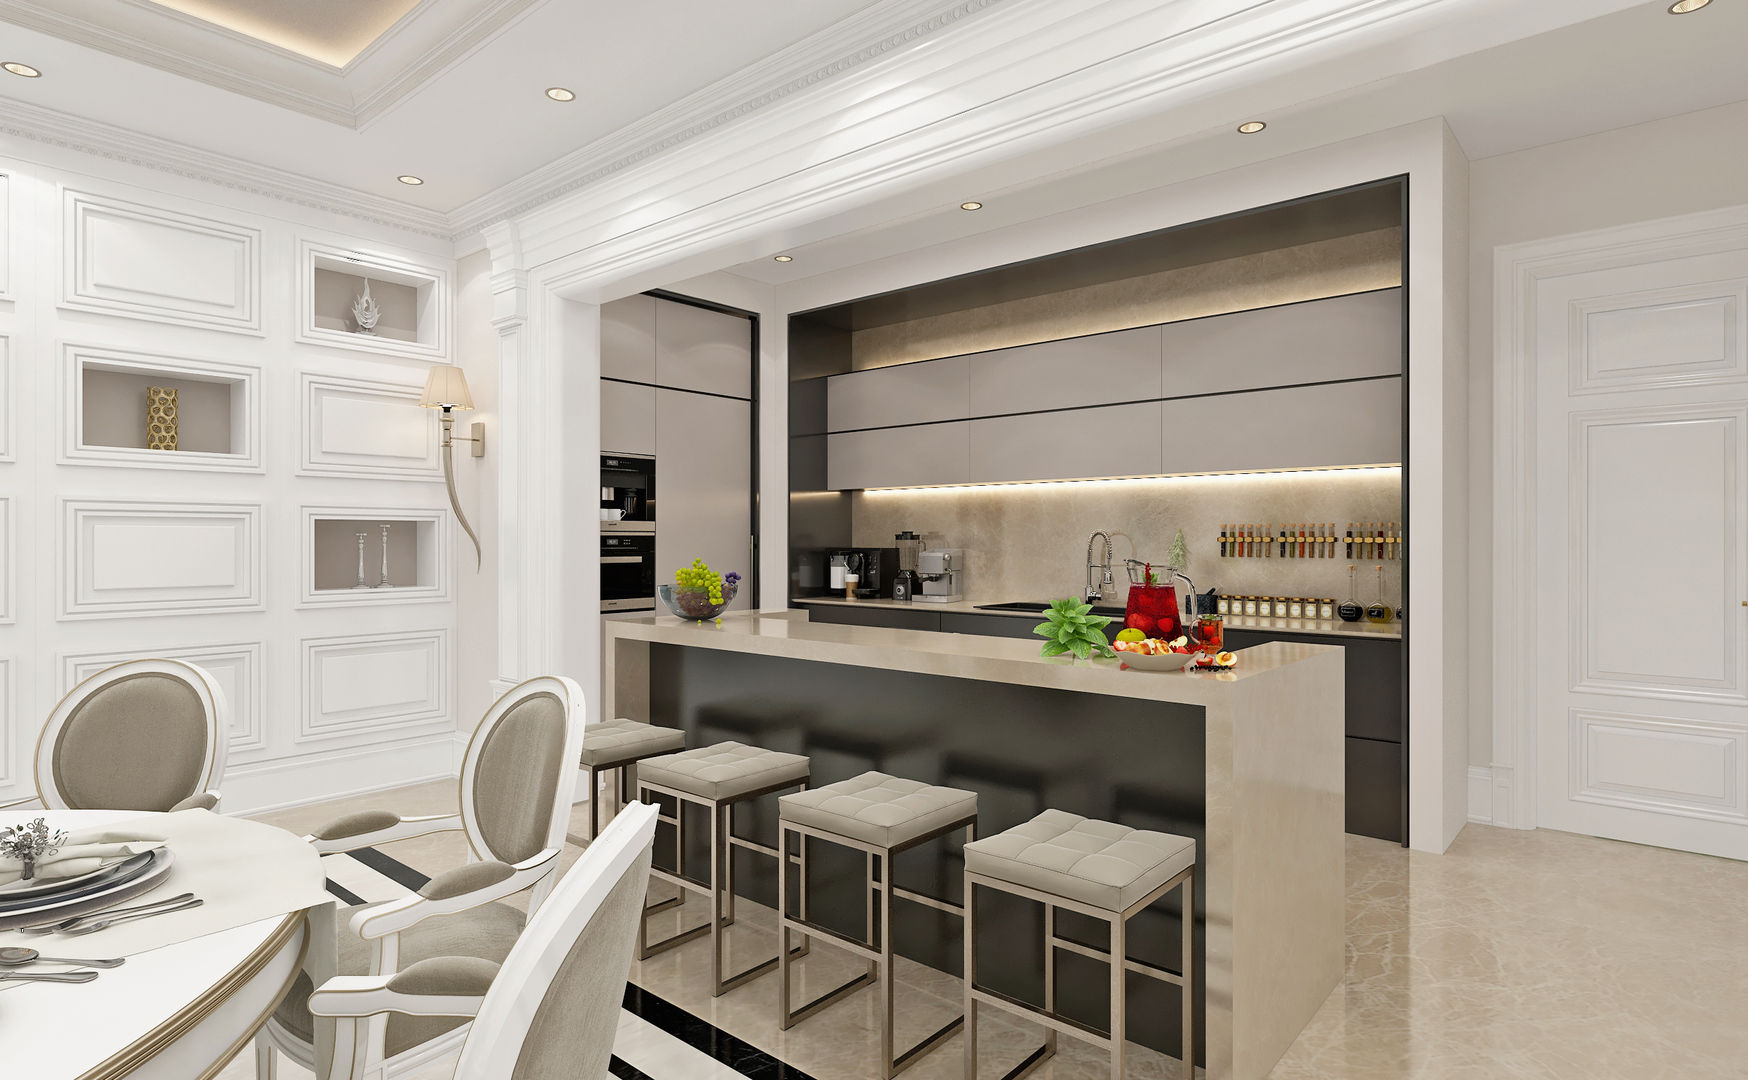 Kitchen Sia Moore Archıtecture Interıor Desıgn Salon classique